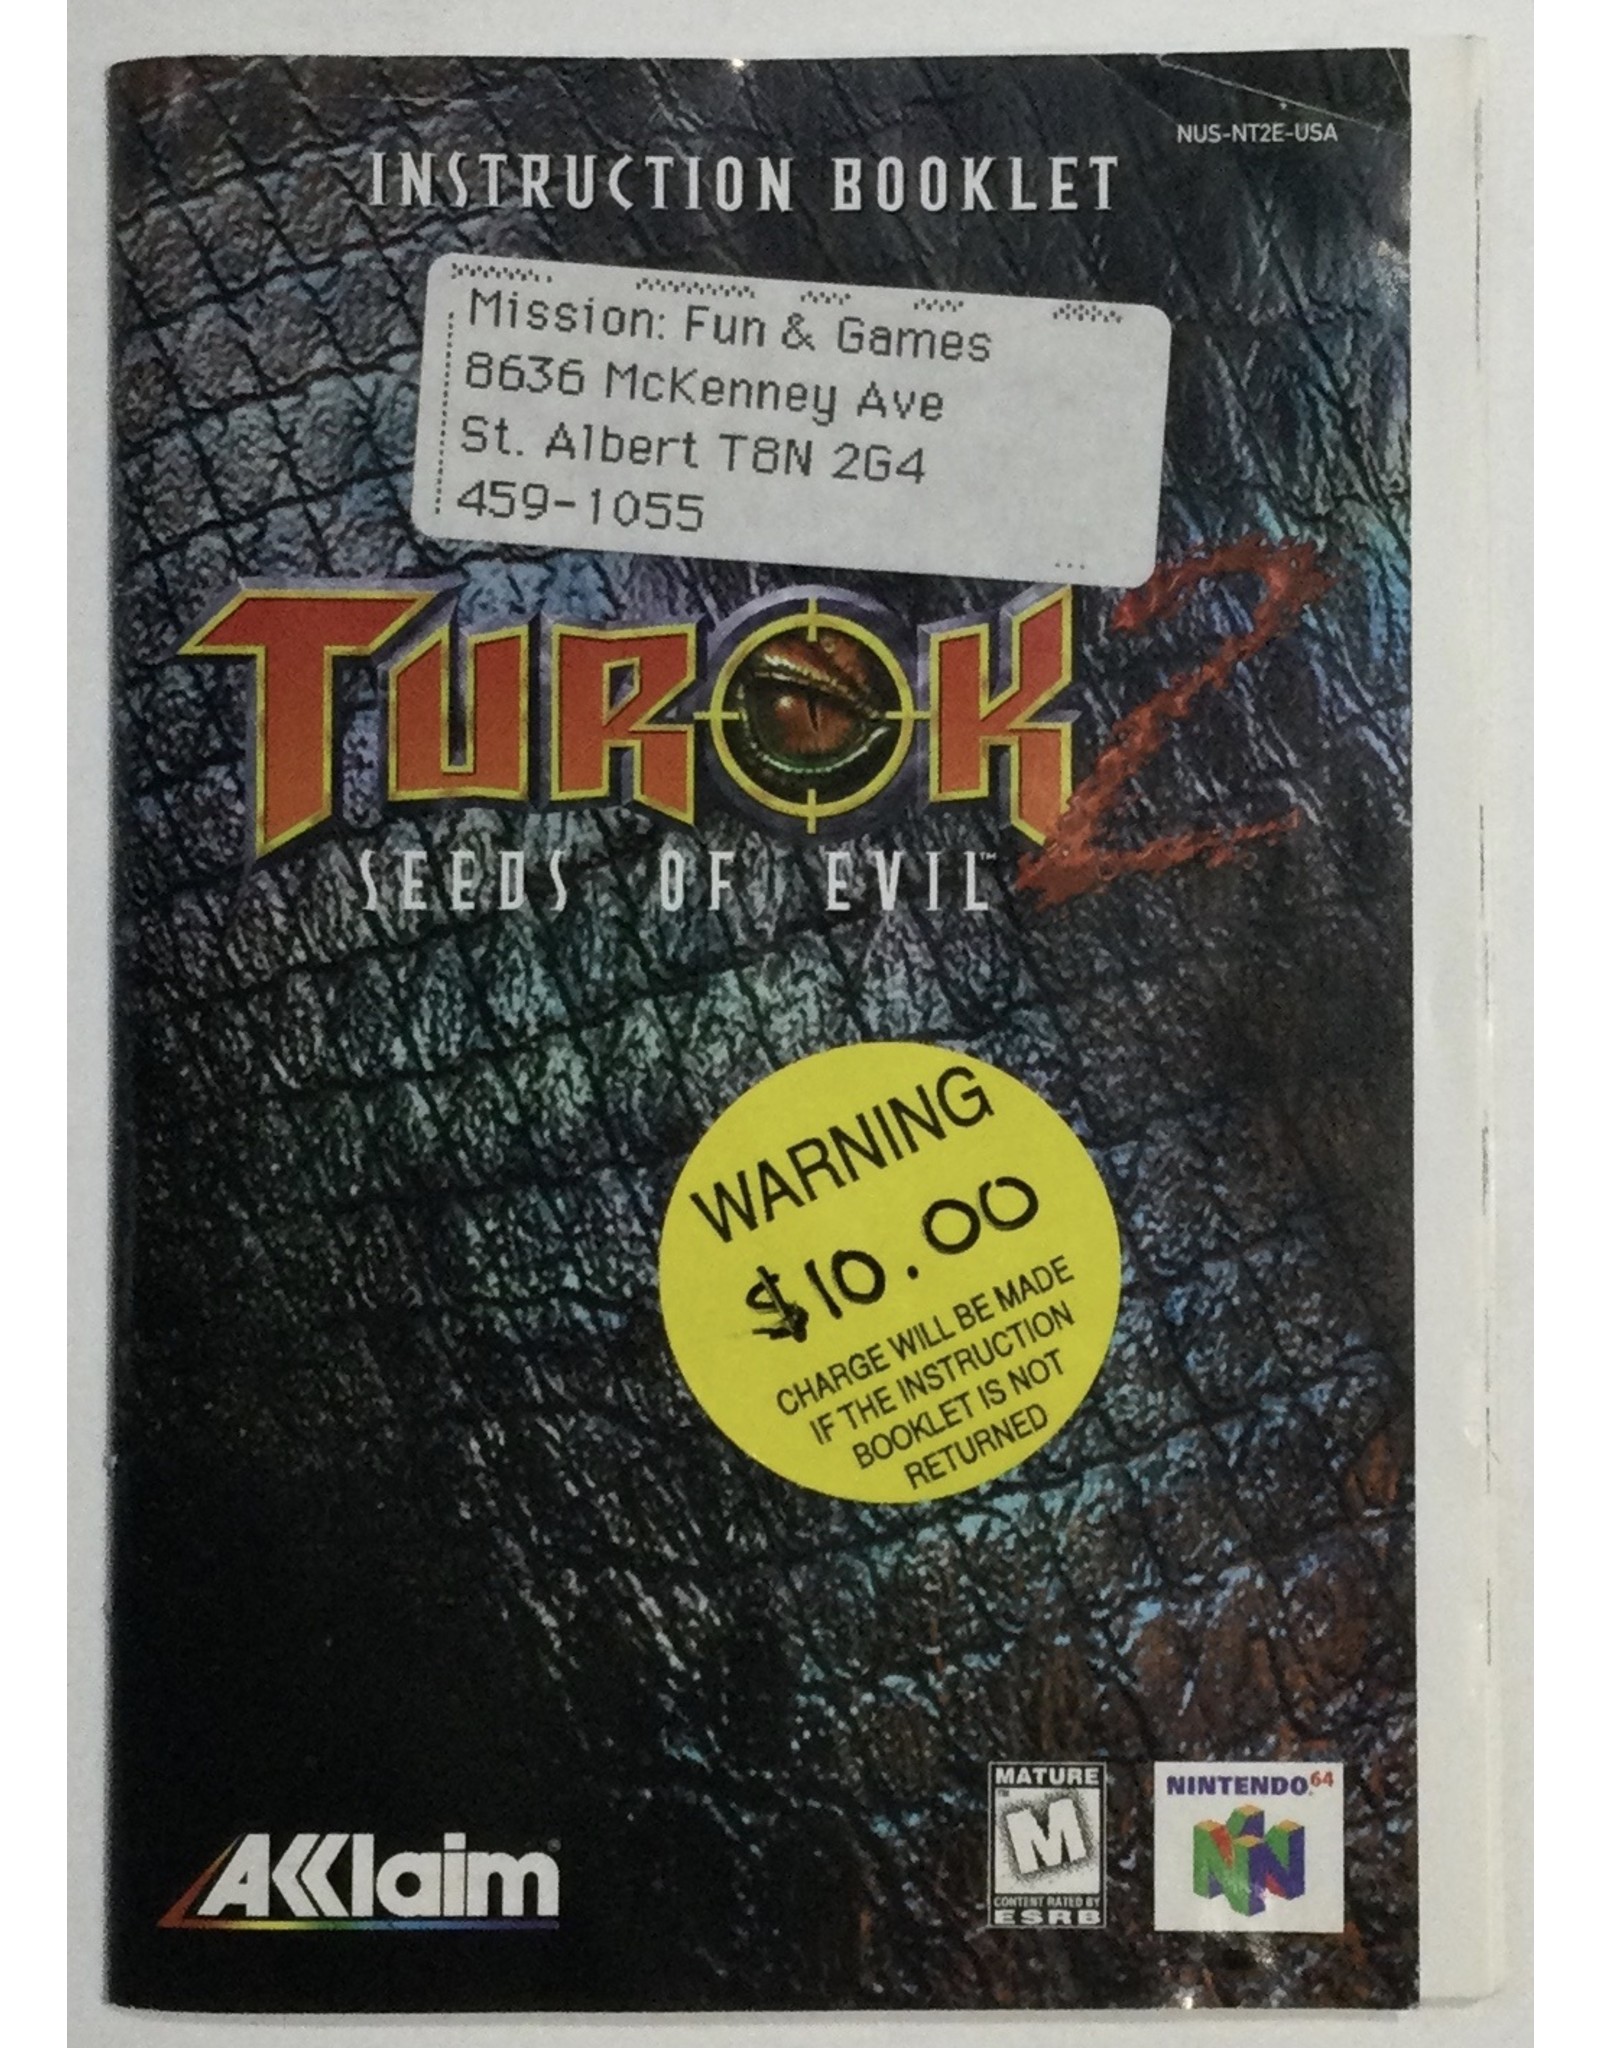 ACCLAIM Turok 2 Seeds of Evil for Nintendo 64 (N64) - CIB